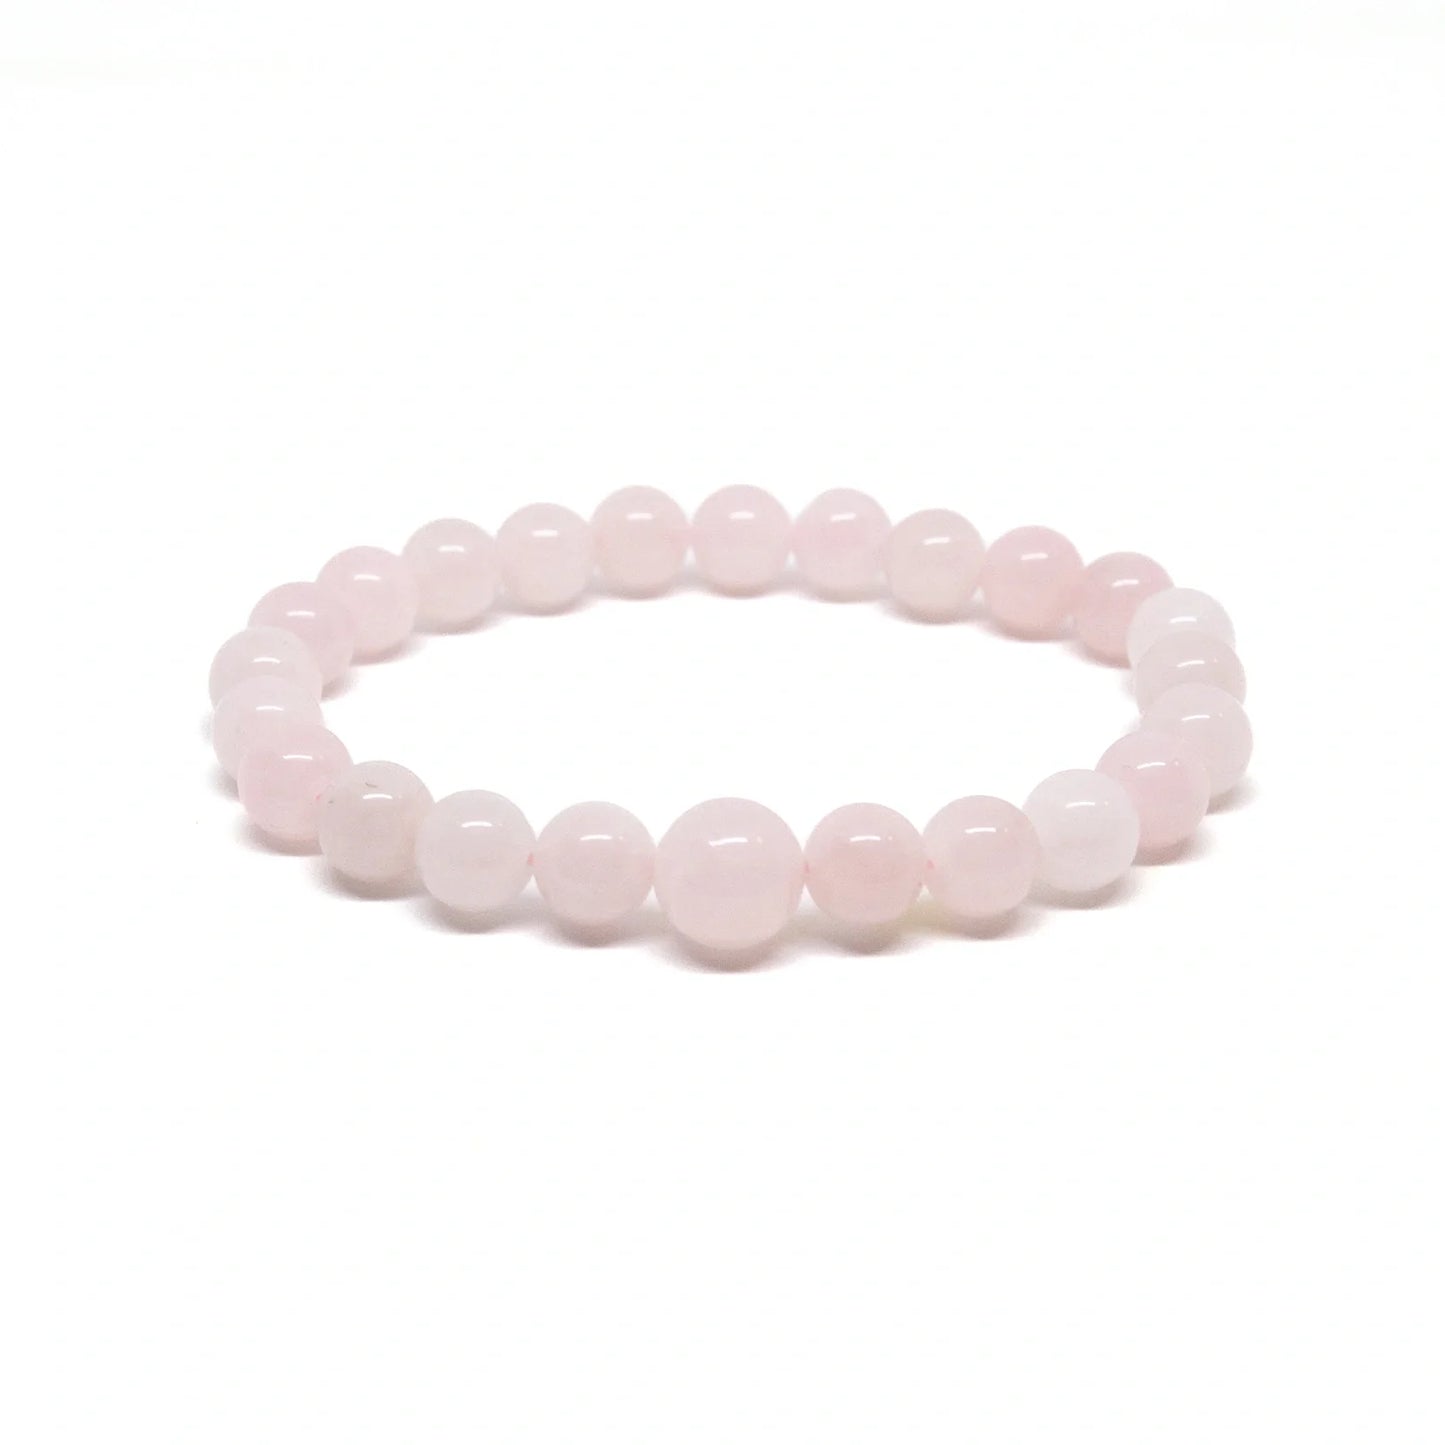 Rose Quartz Stretchy Beaded Bracelet - Prayer Beads - 6mm (6 Pack) - Large Wrists